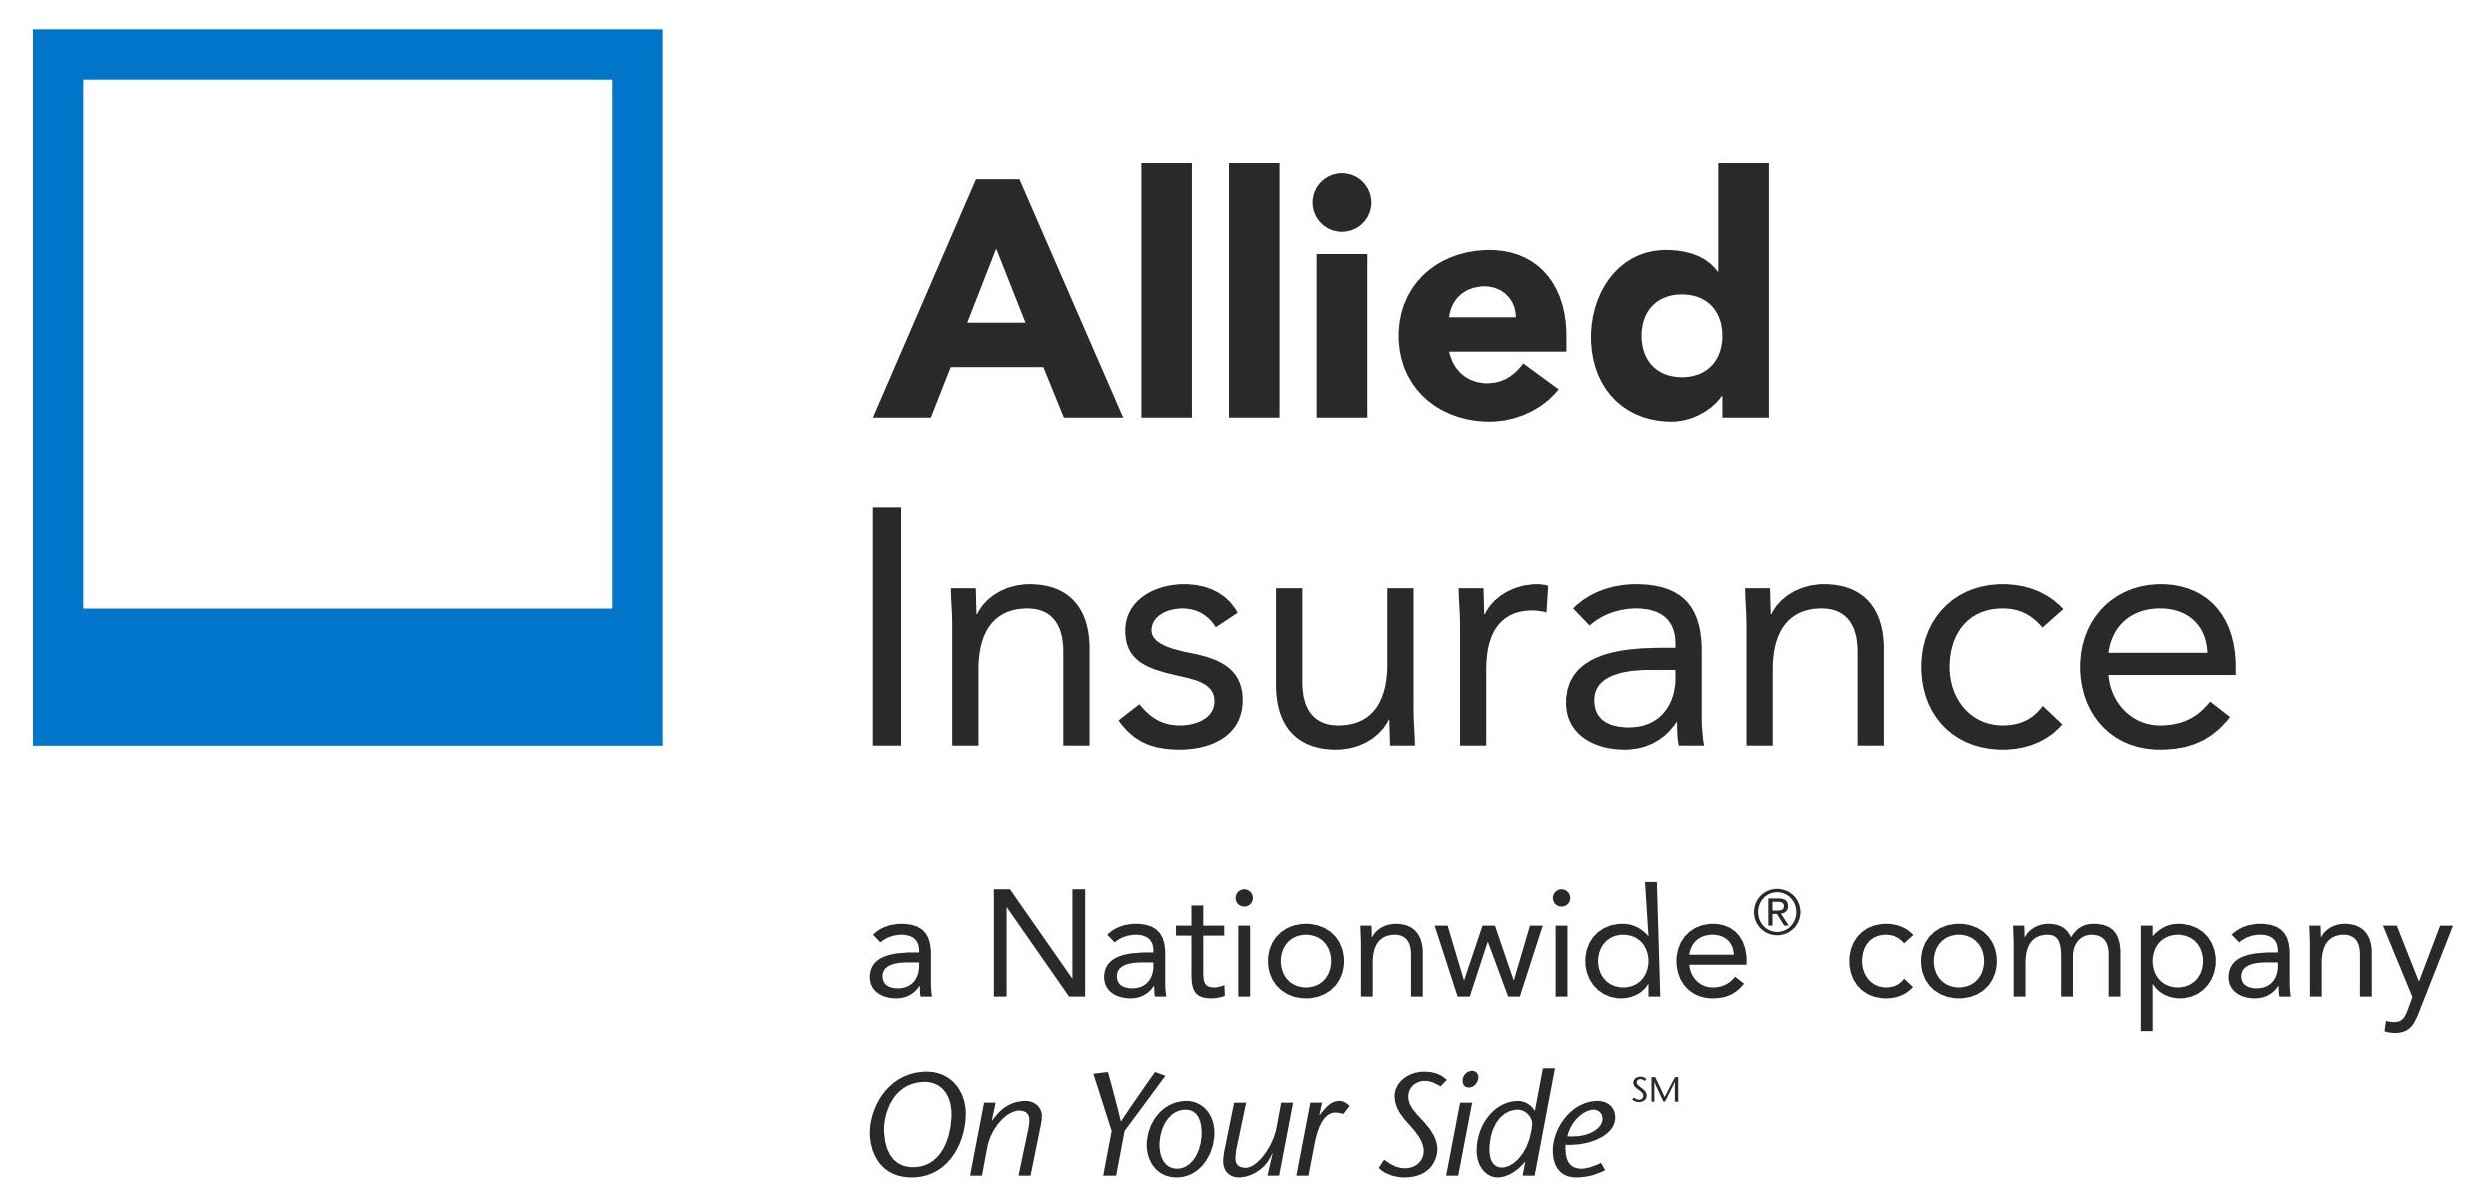 Allied Insurance Logo [EPS File]